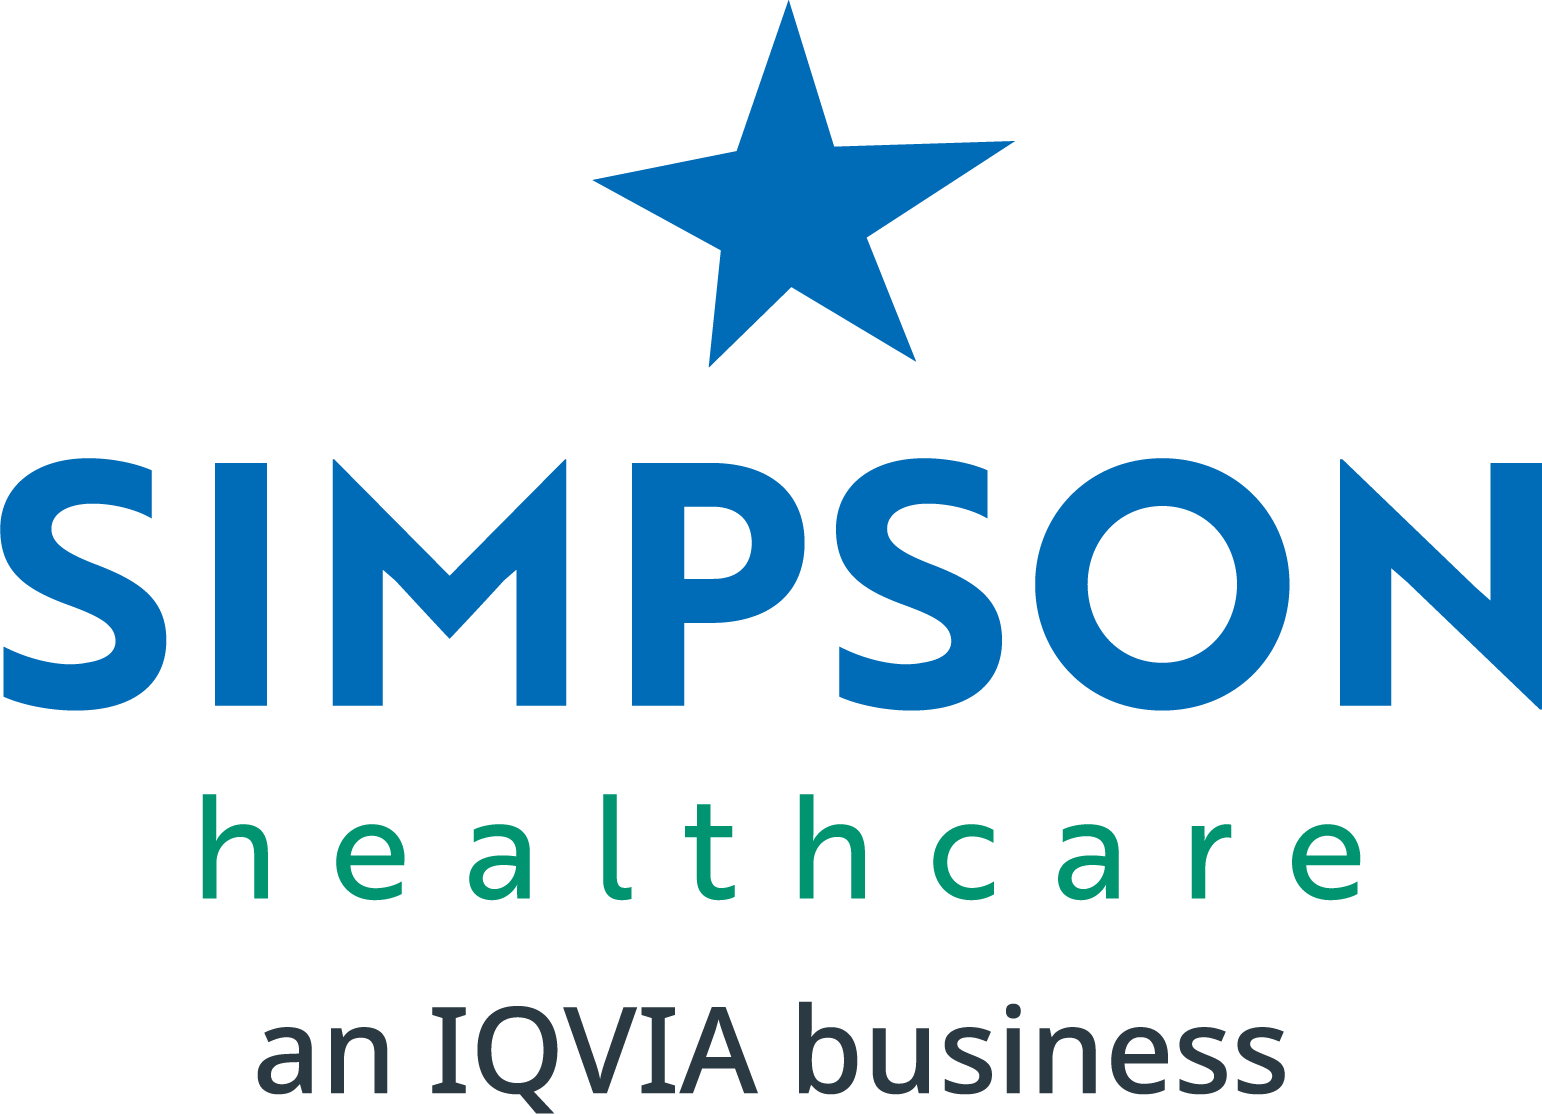 Simpson Healthcare, an IQVIA business logo